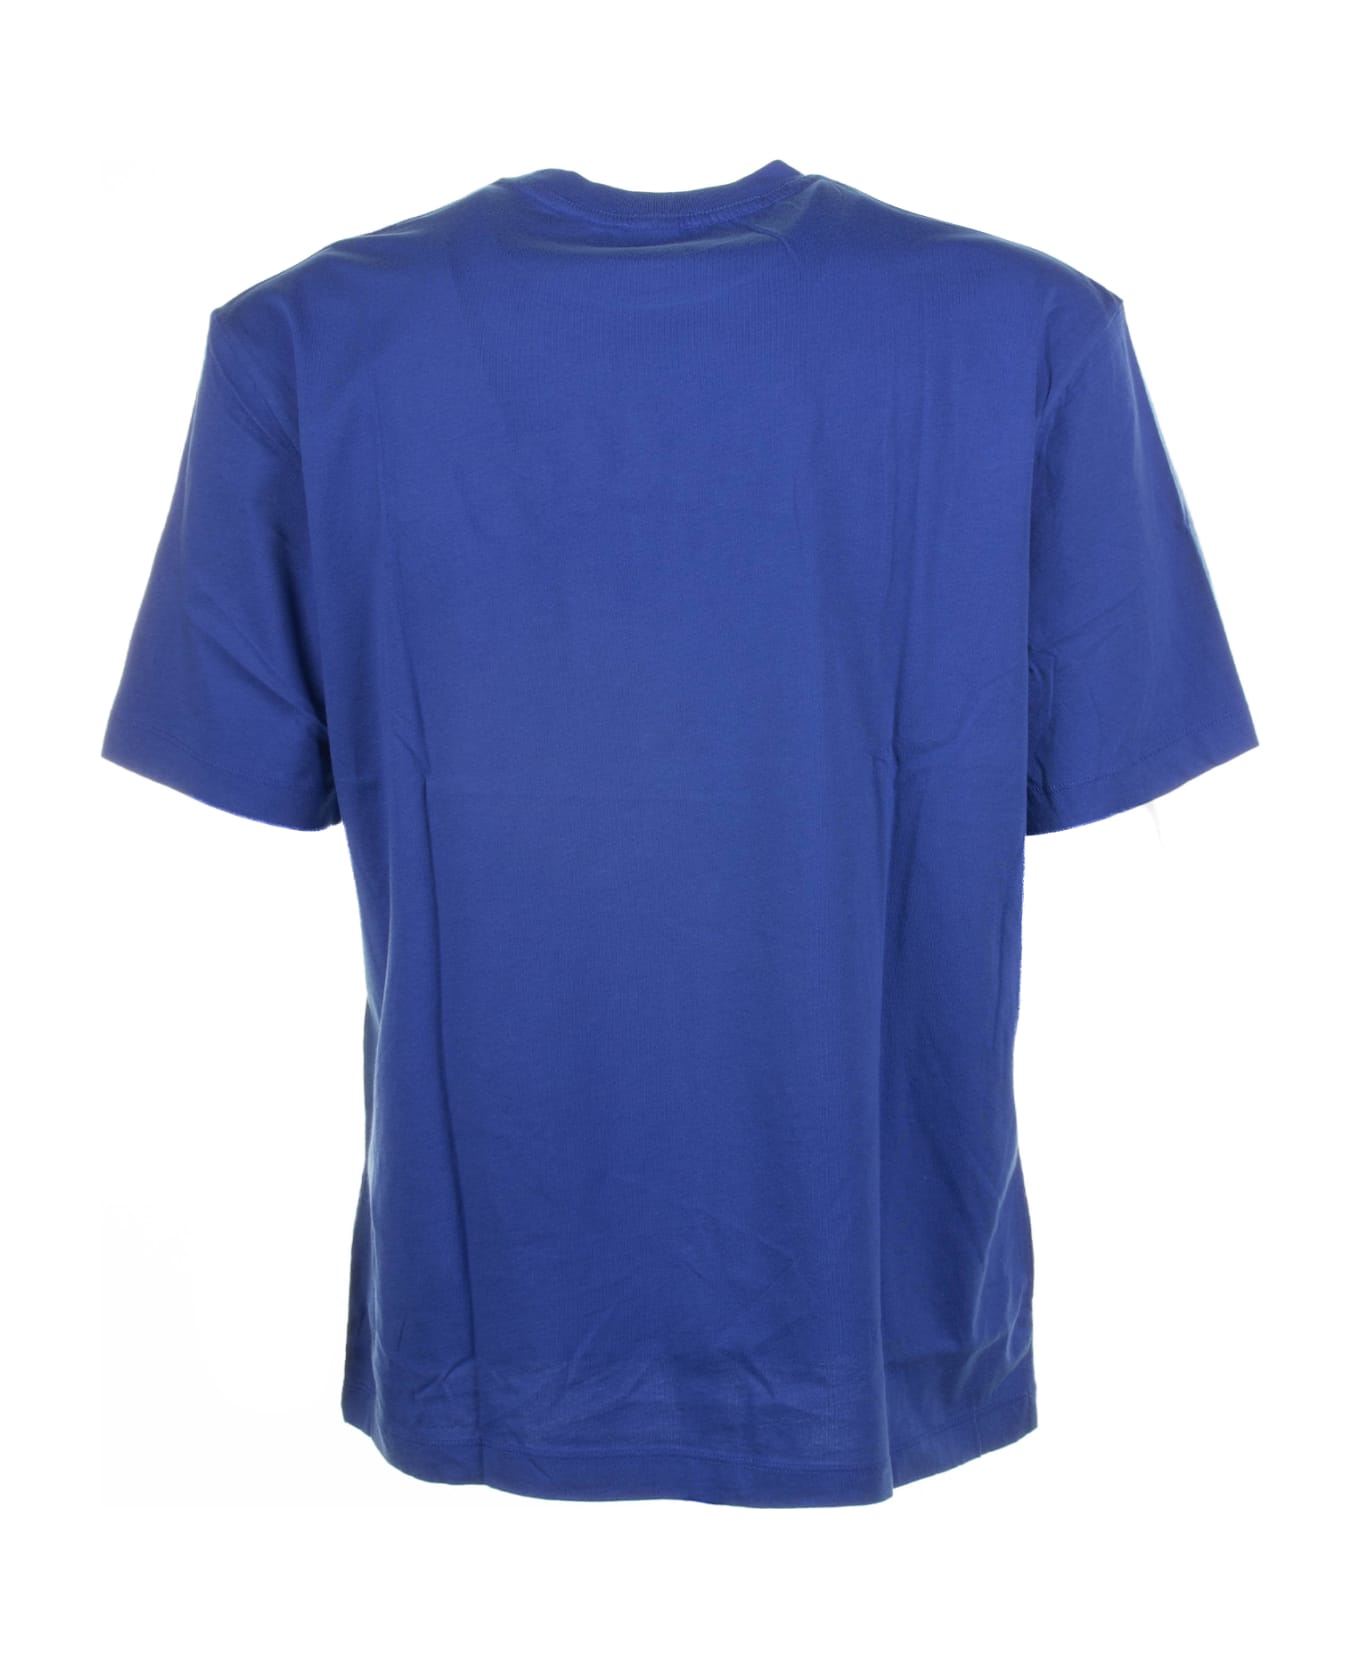 Blauer Blue Cotton T-shirt - MOLTO BLU シャツ